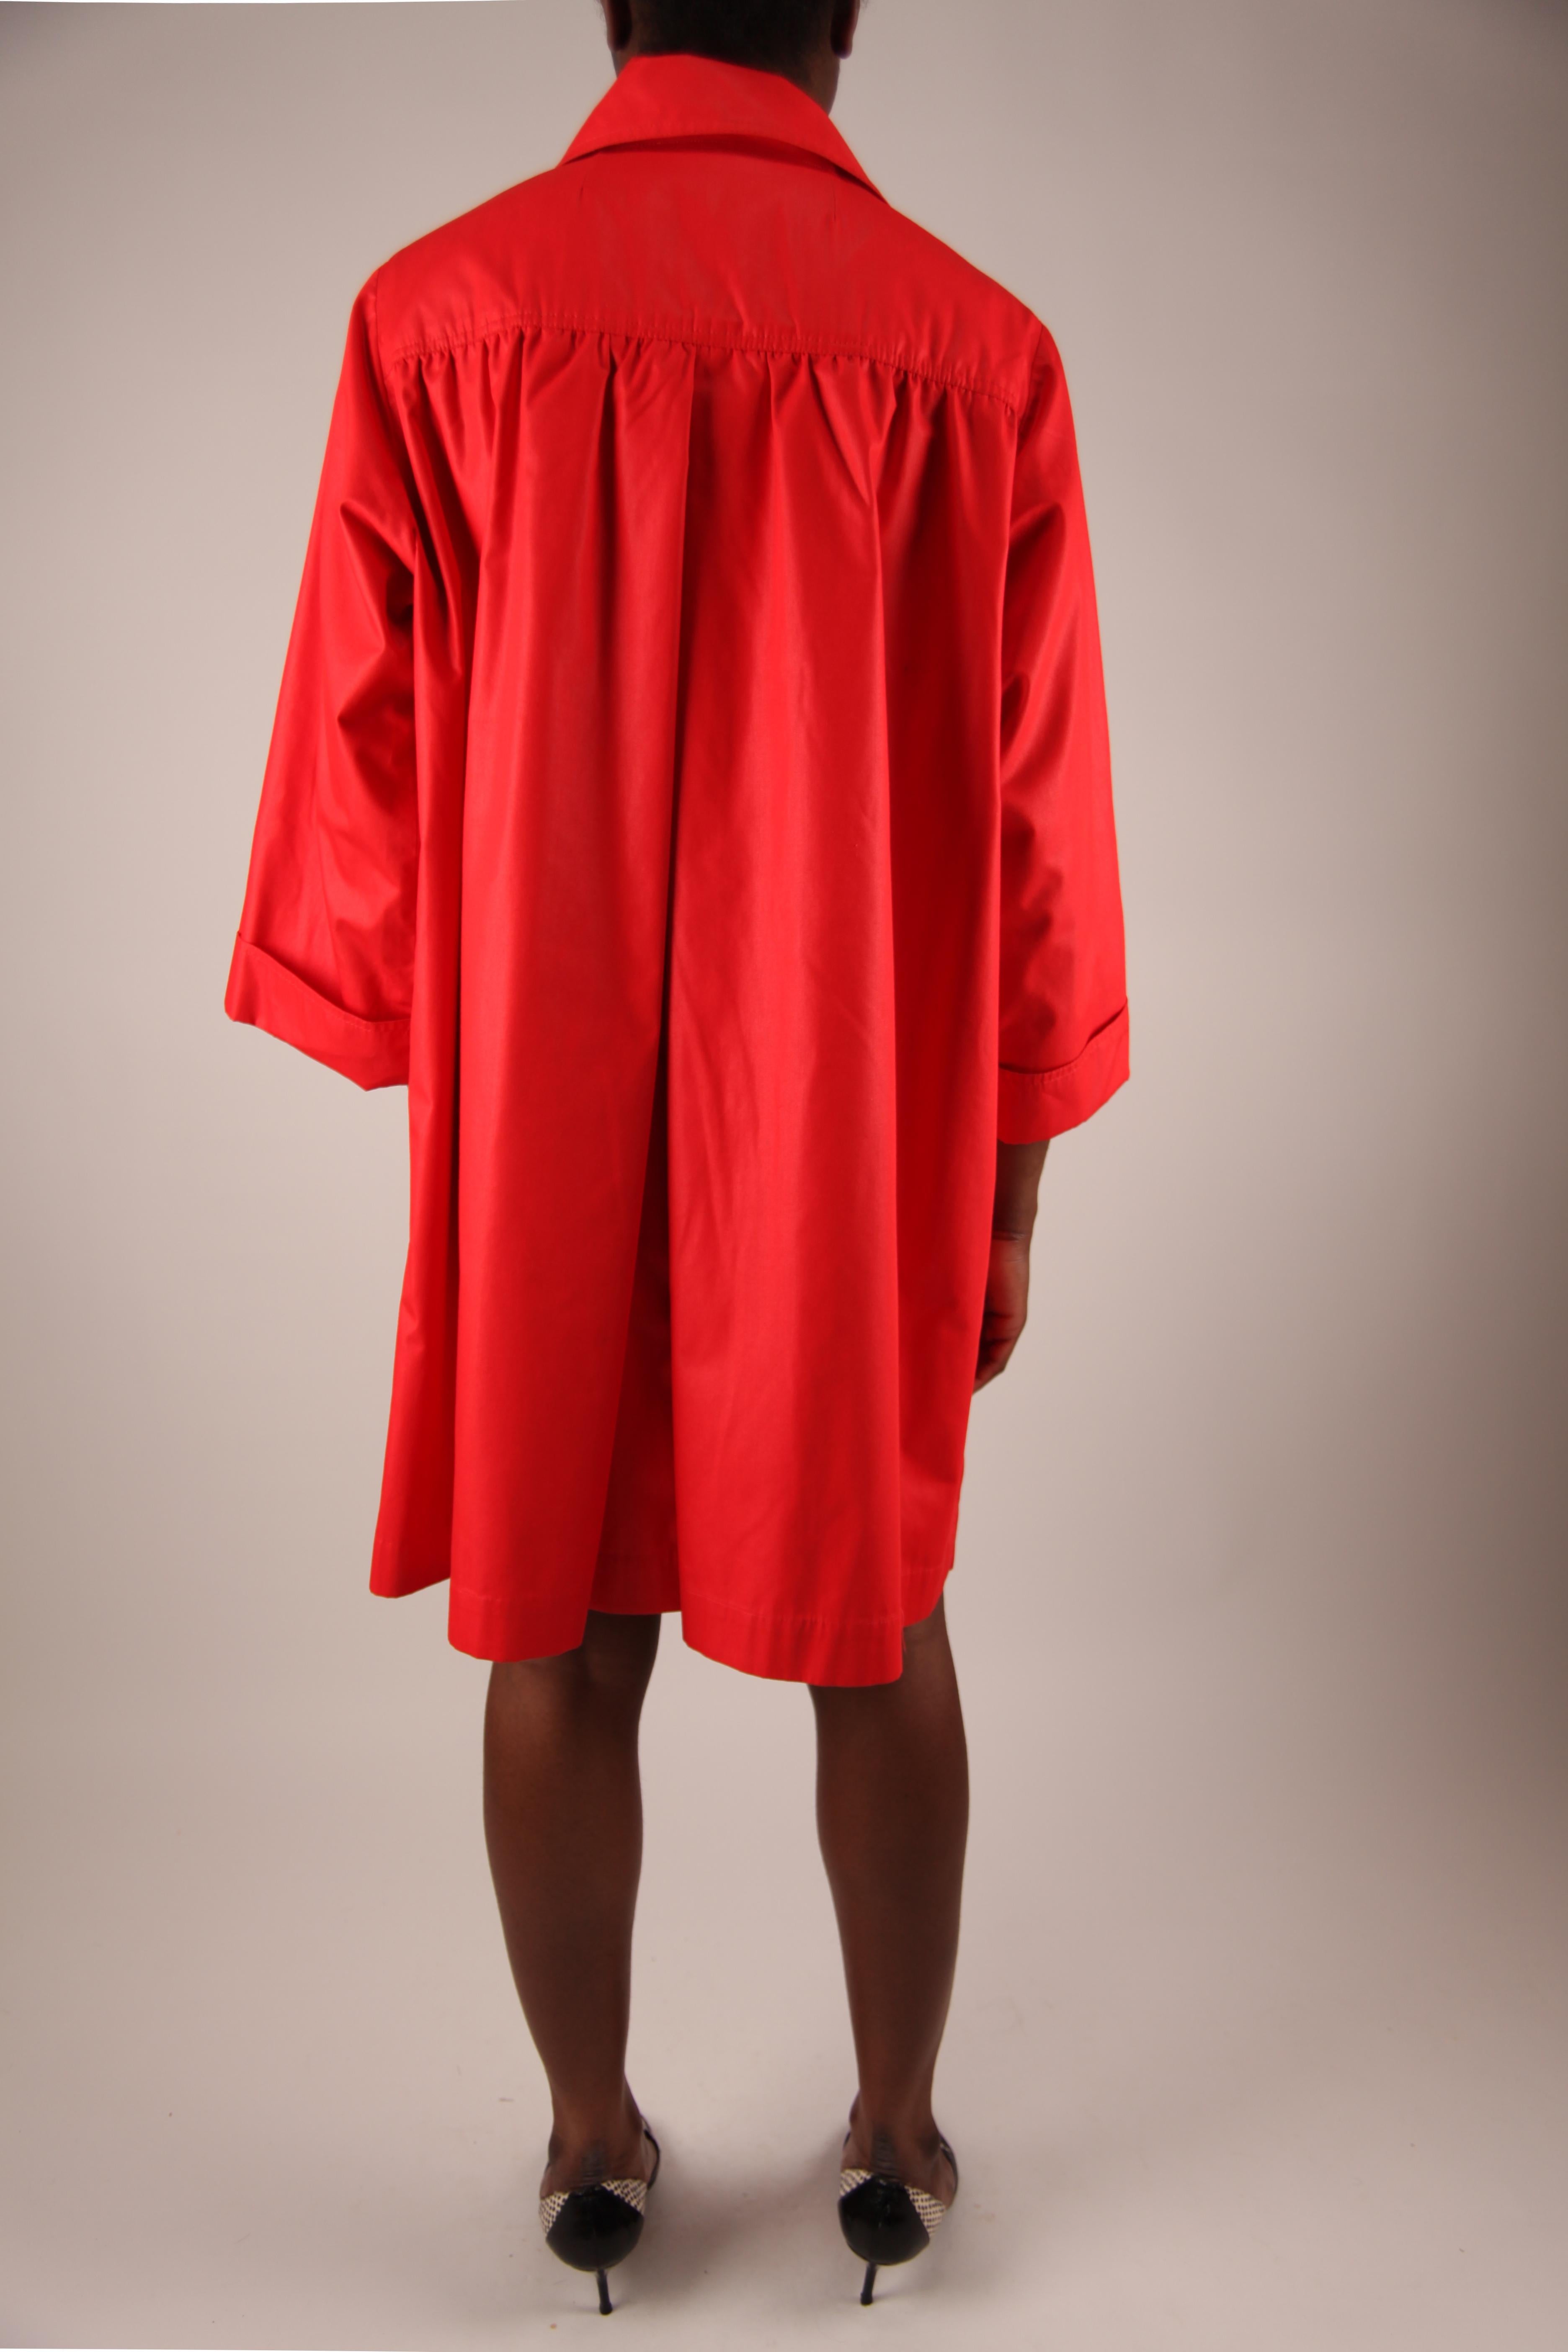 Women's Christian Dior rare  modernist 1960s waxed red mini coat.